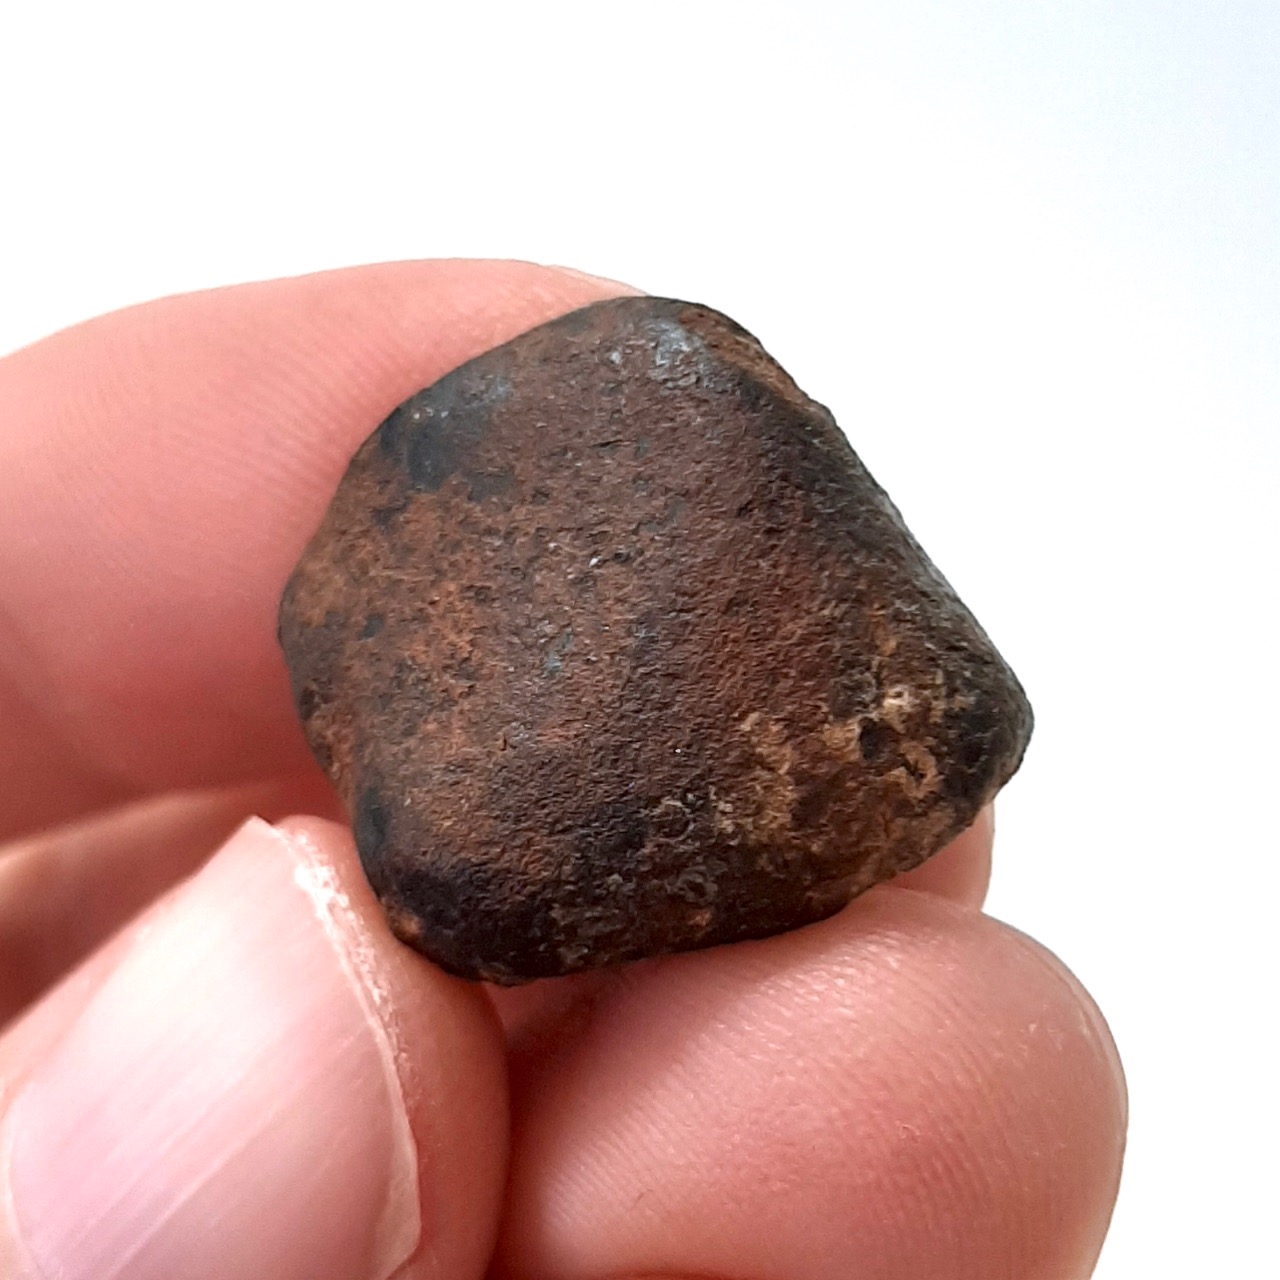 Taza meteorite. NWA 859.